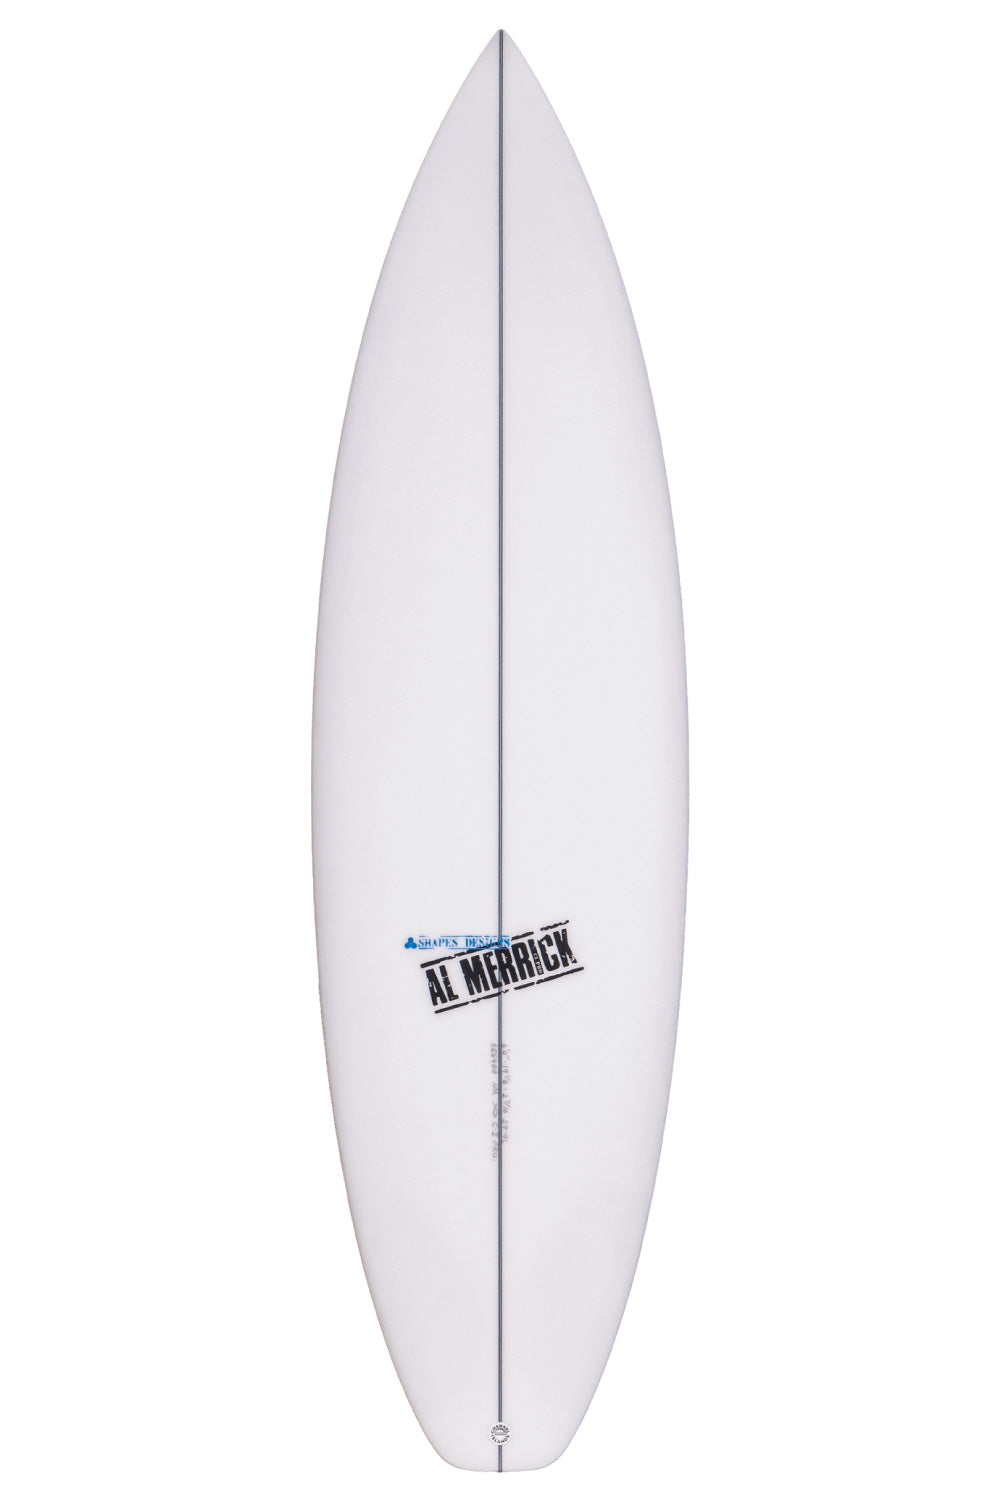 Channel Islands CI Pro Surfboard - Squash Tail